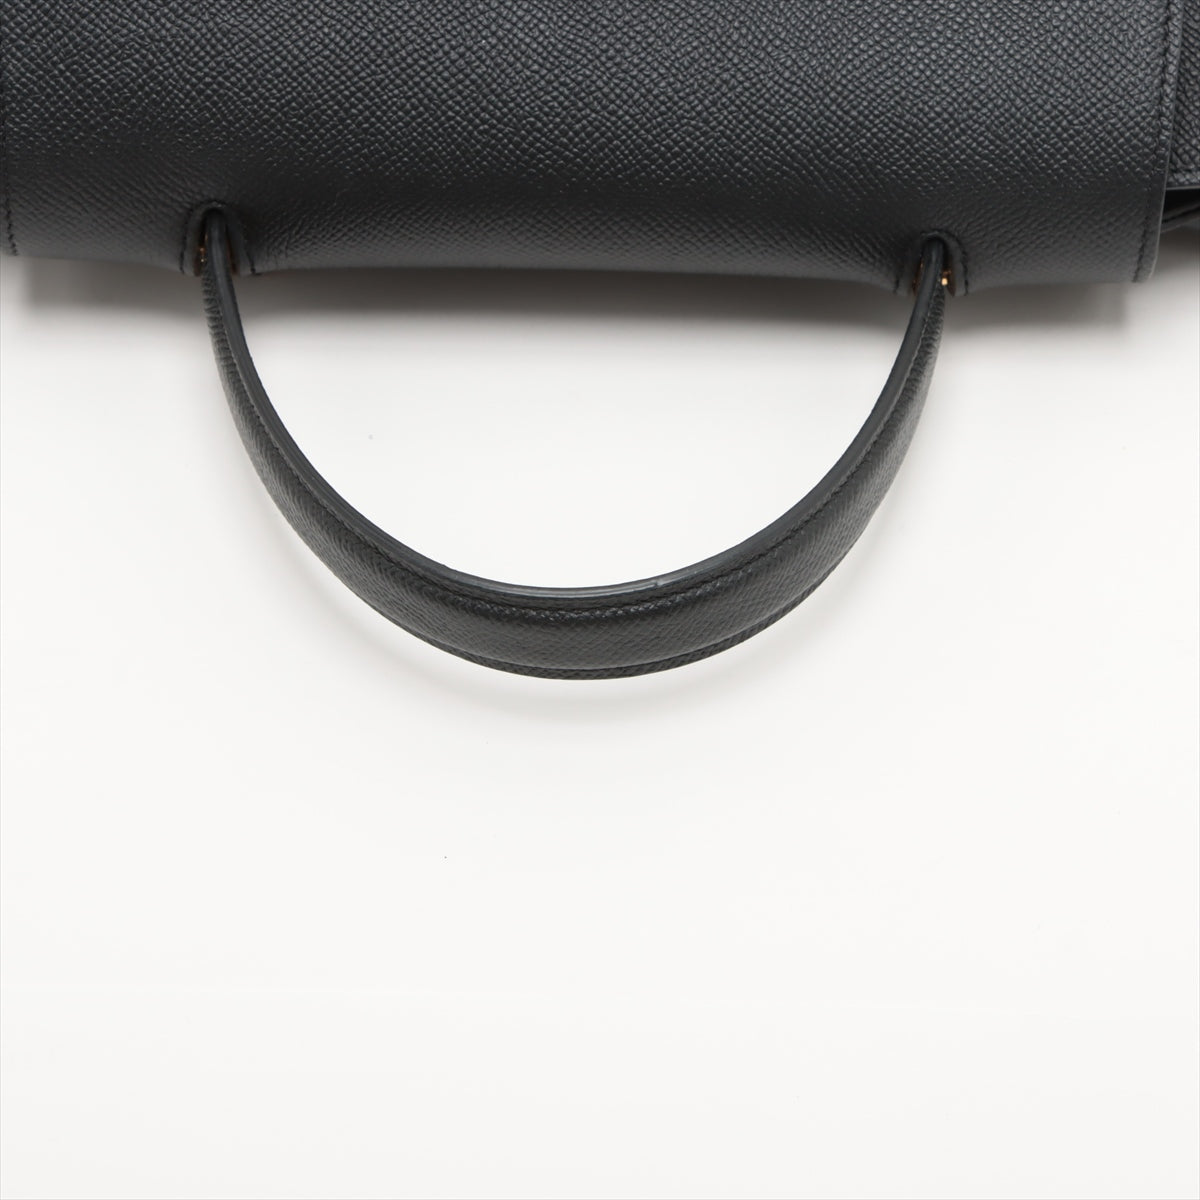 Celine Belt Bag Micro Leather 2WAY Handbag Black